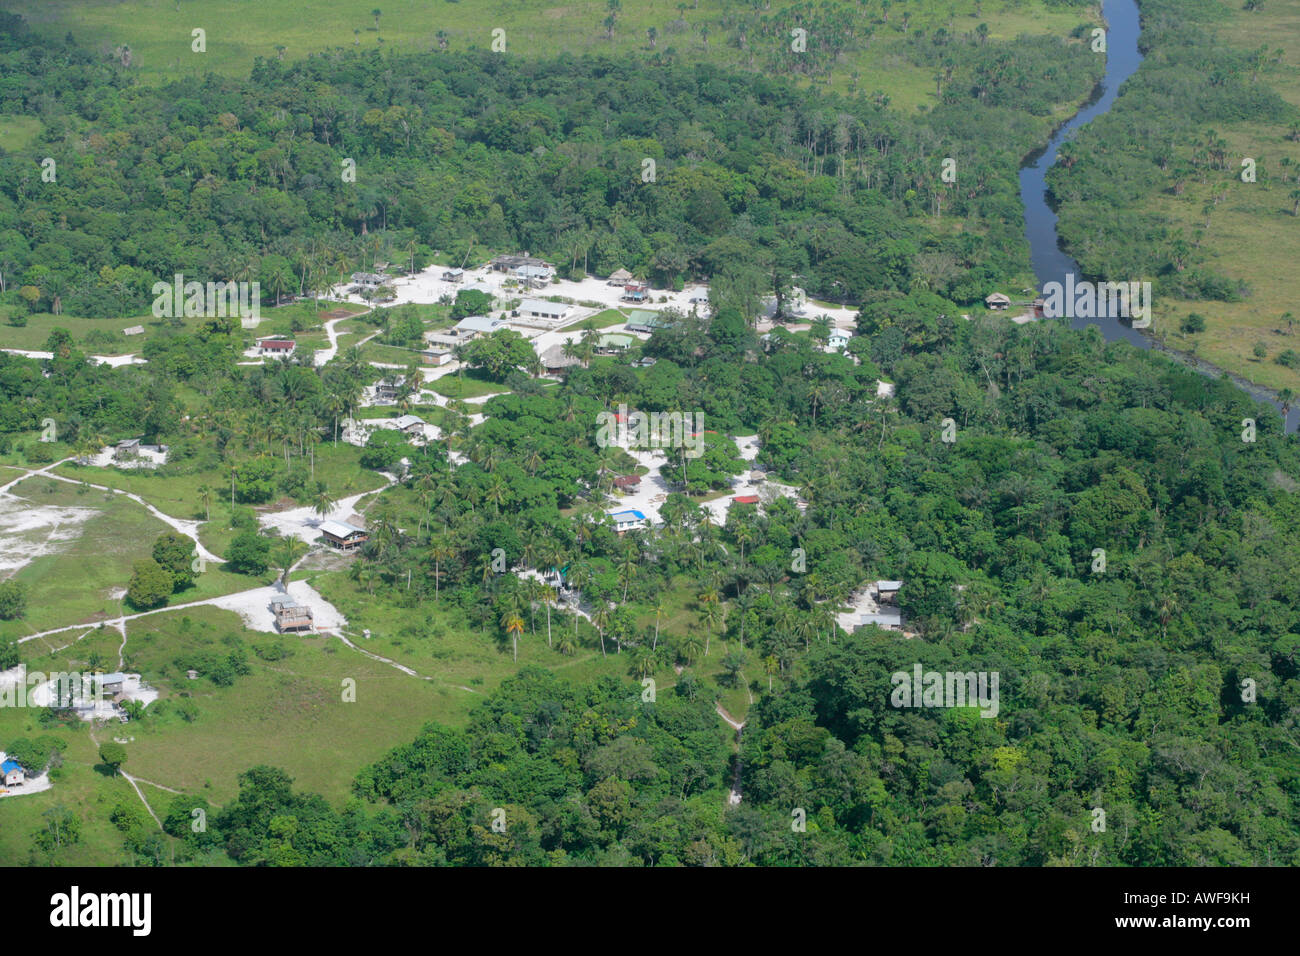 New housing development in the rainforest, Guyana, South America Stock Photo